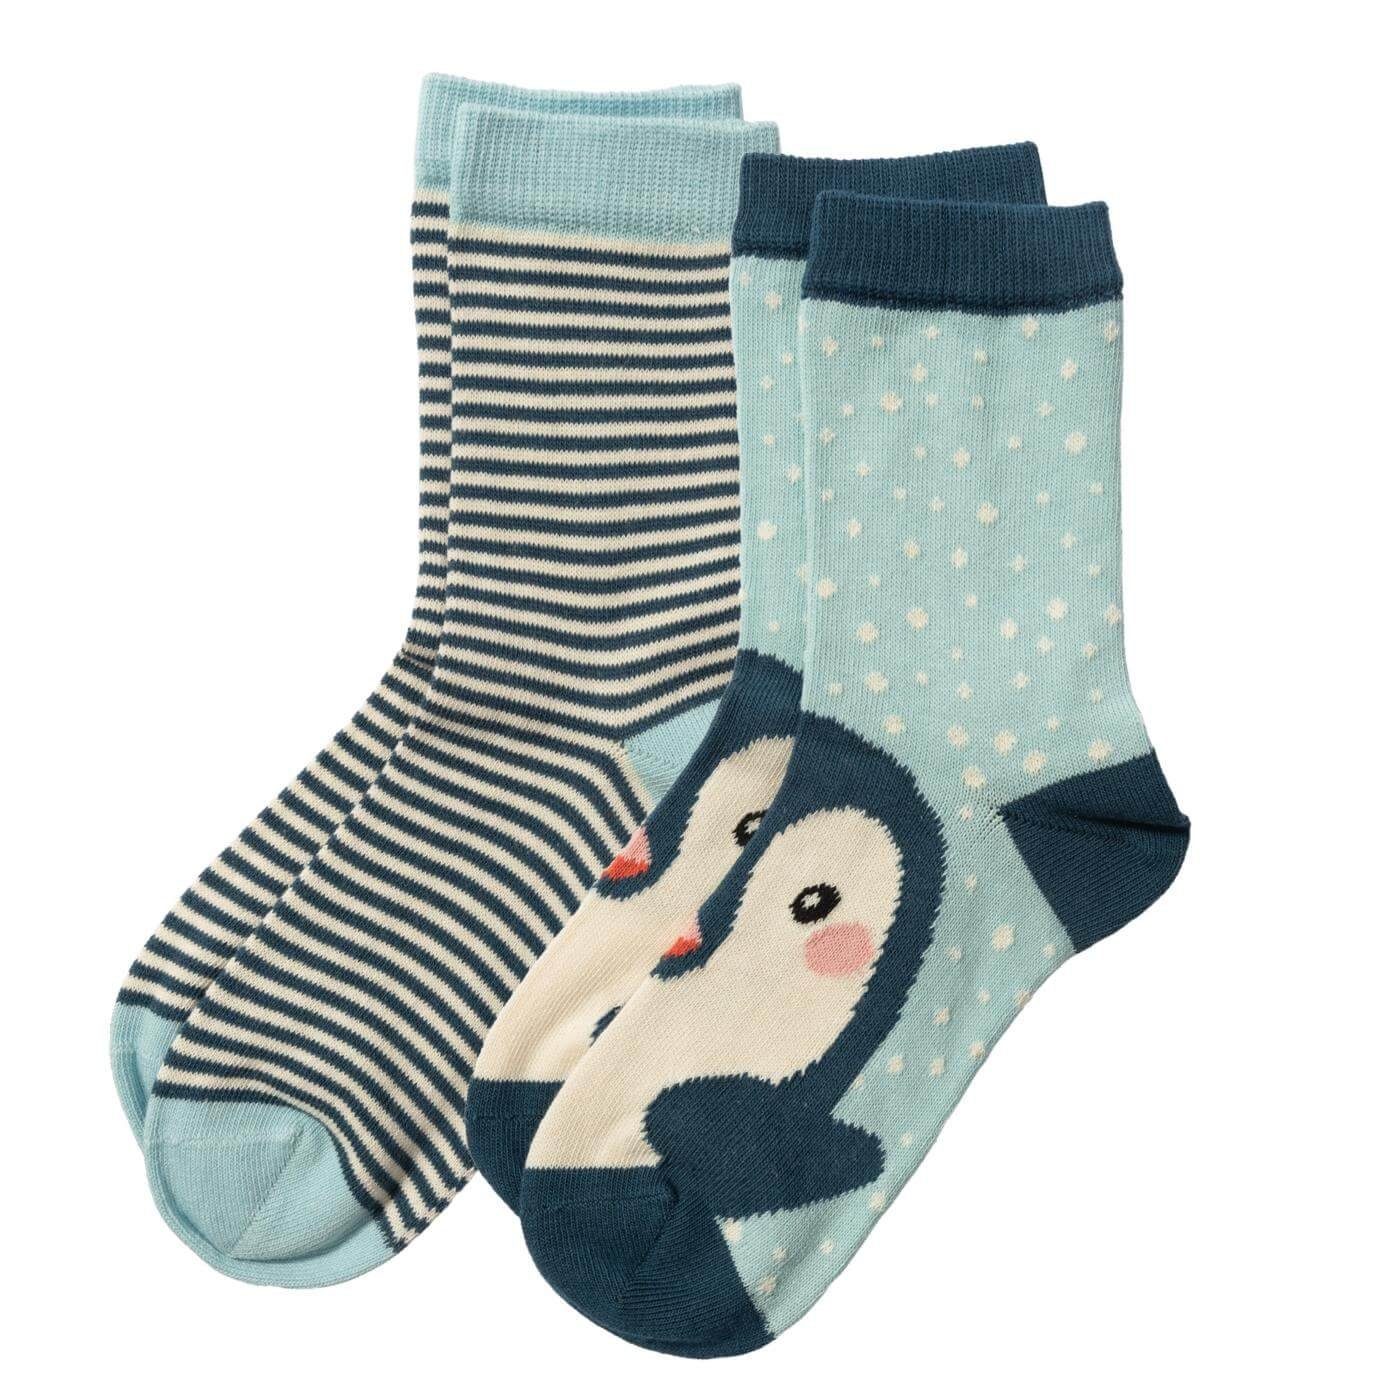 LIVING CRAFTS Socken BEAR Perfekte Kindersocken in großer Auswahl Little Penguin